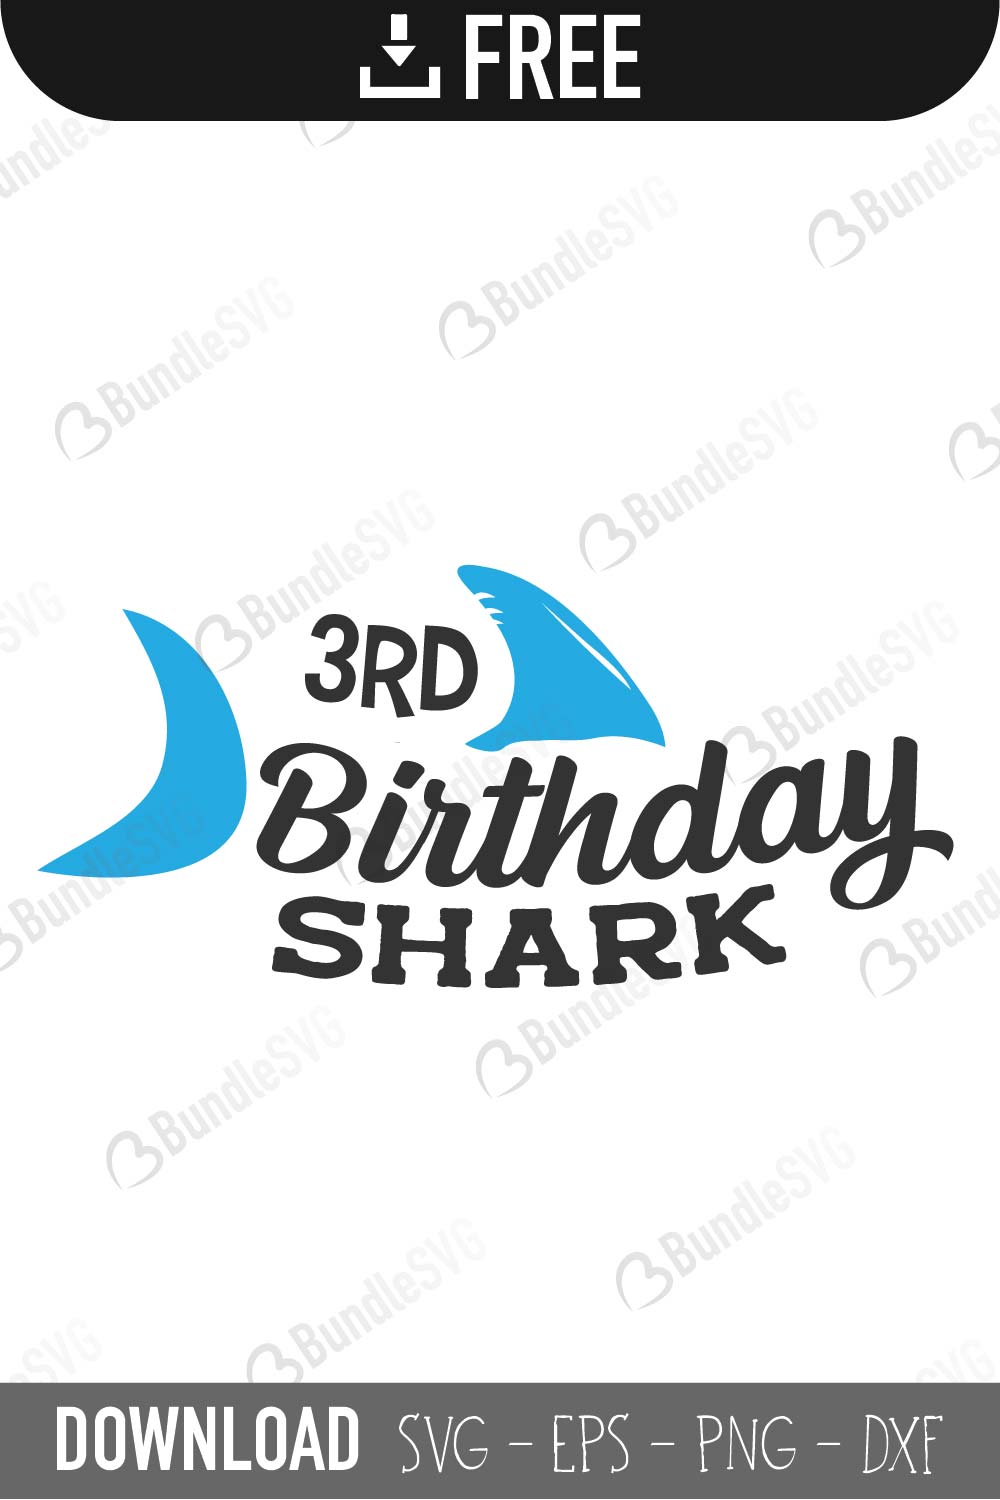 Birthday Shark Svg Cut Files Free Download Bundlesvg